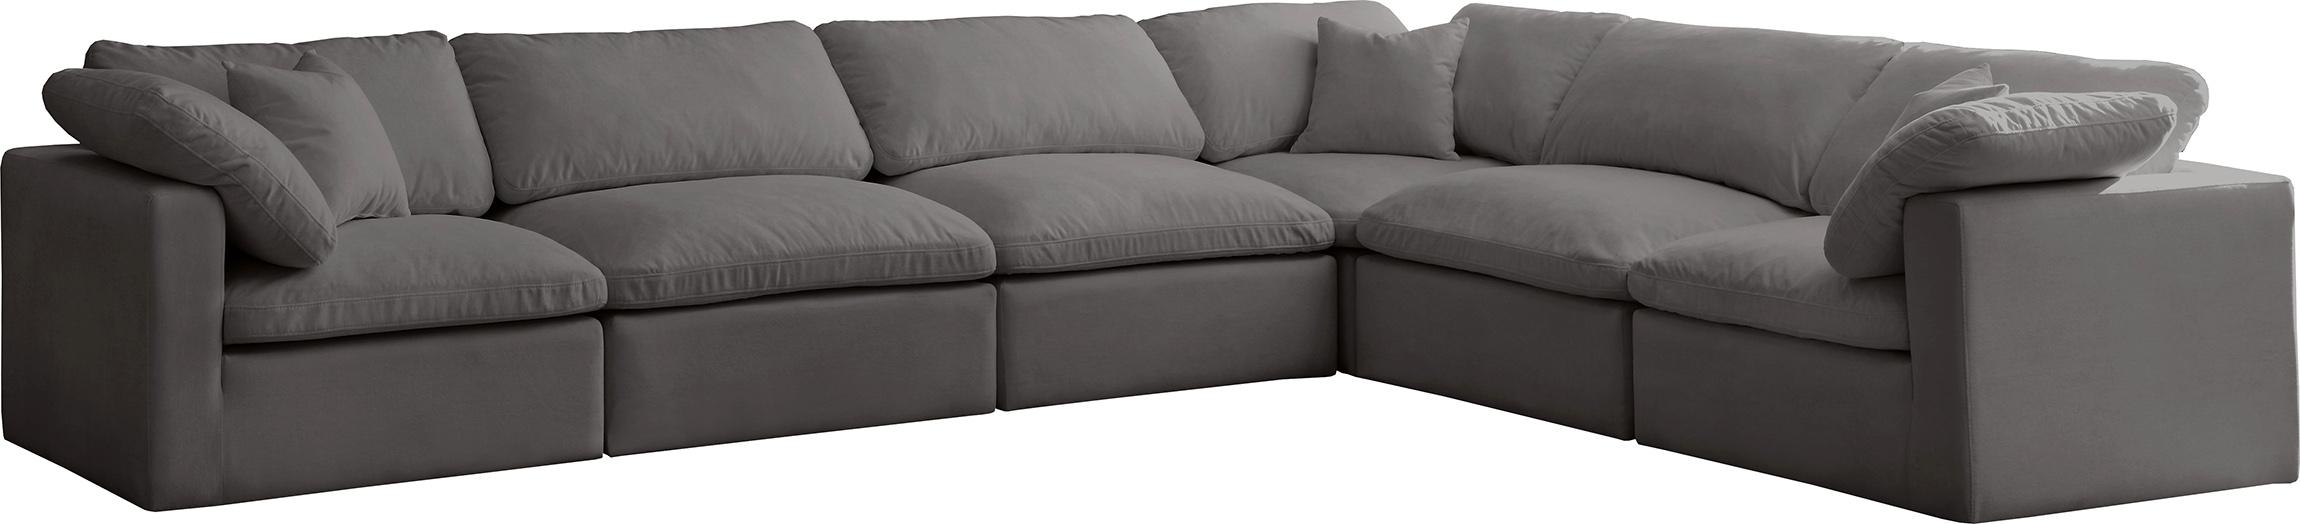 Contemporary, Modern Modular Sectional Sofa 602Grey-Sec6A 602Grey-Sec6A in Gray Fabric